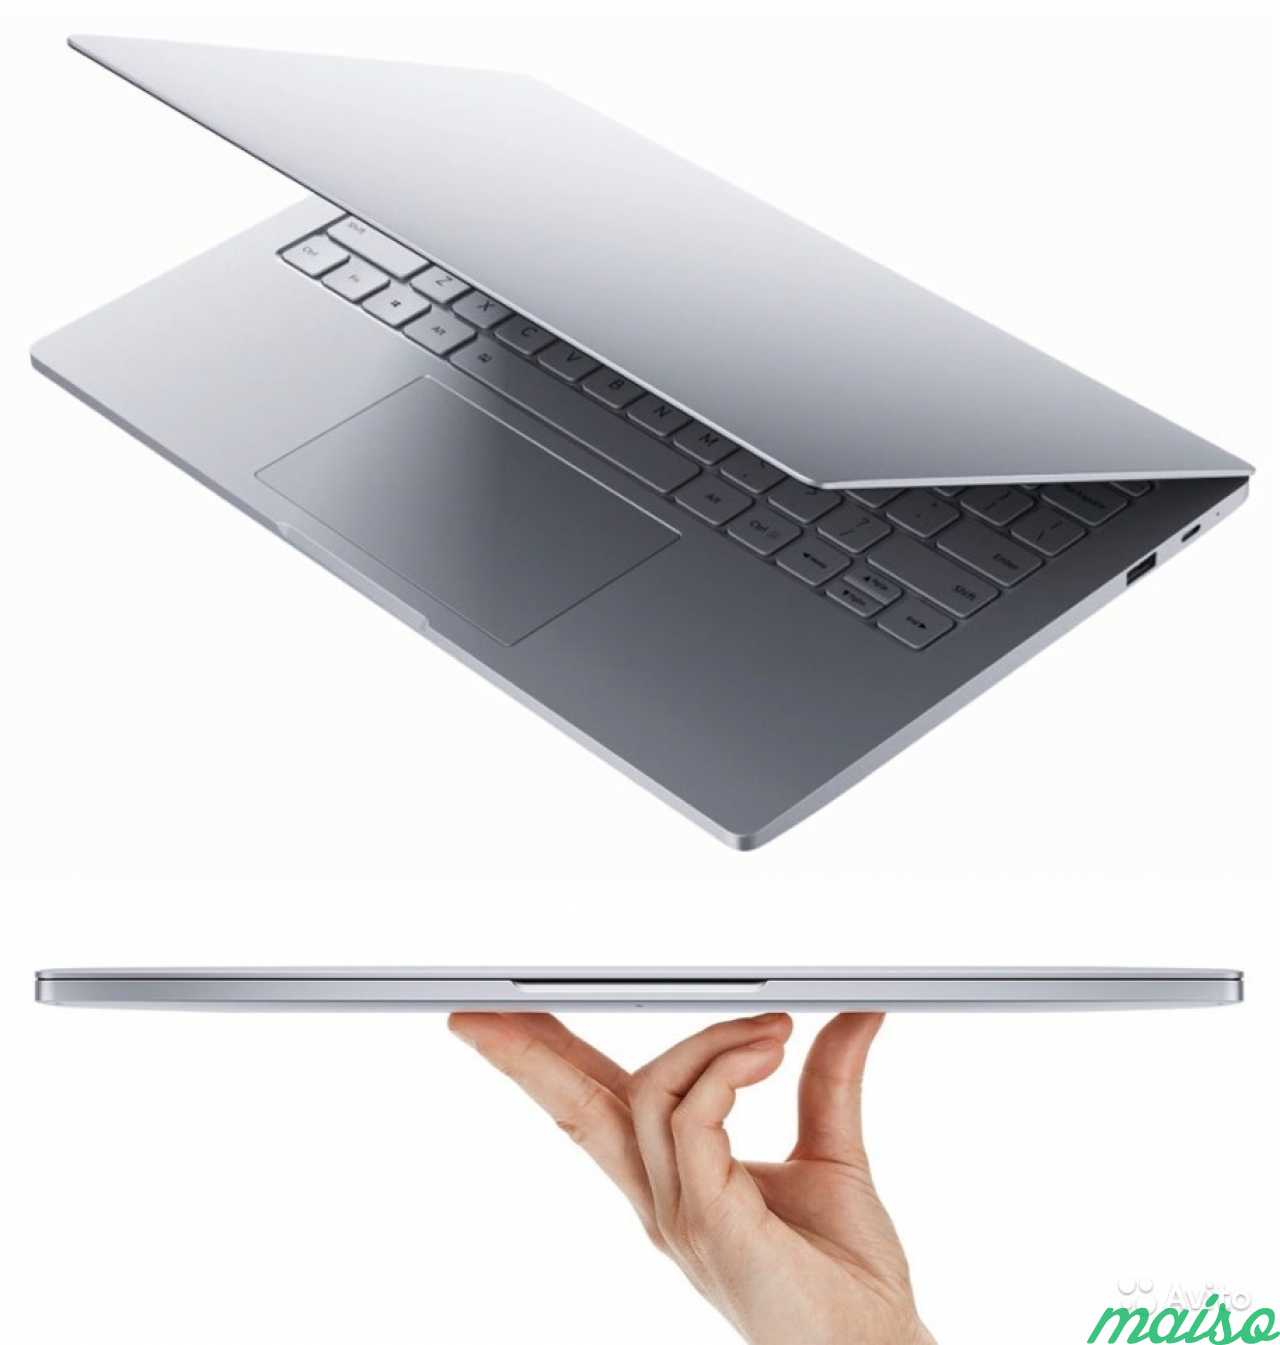 Ультрабук. Ноутбук Xiaomi mi Notebook Air 13.3. Xiaomi mi Notebook Air 12.5. Ноутбук Xiaomi mi Notebook 12.5. Ноутбук Xiaomi mi Notebook Air 12.5" 2019.